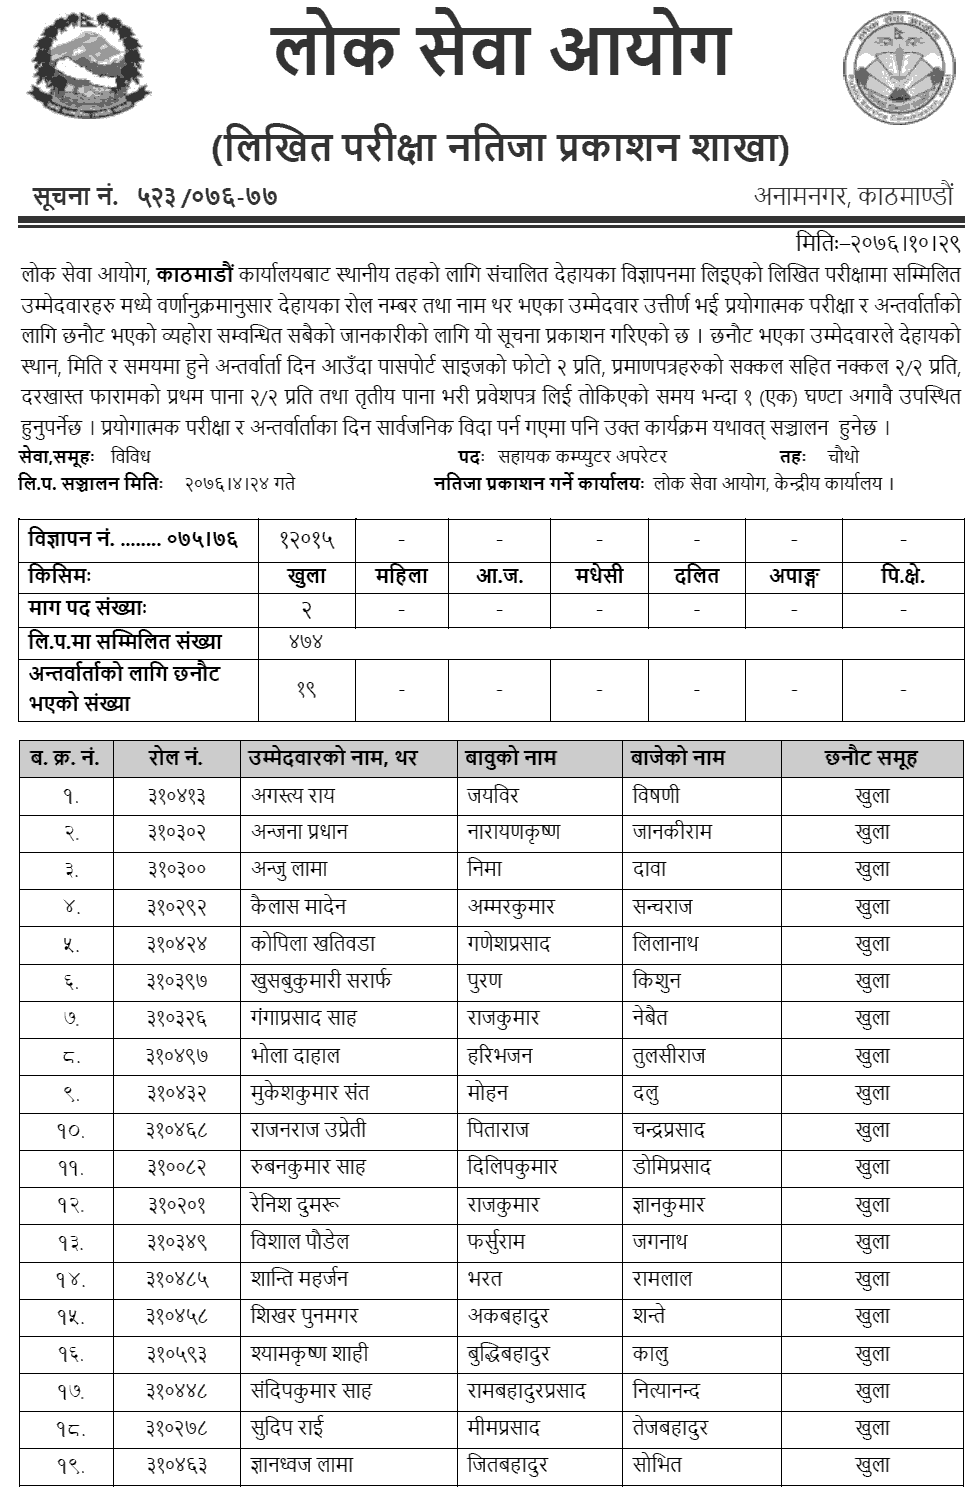 Lok Sewa Aayog Kathmandu Local Level 4th Assistant Computer Operator Written Exam Result